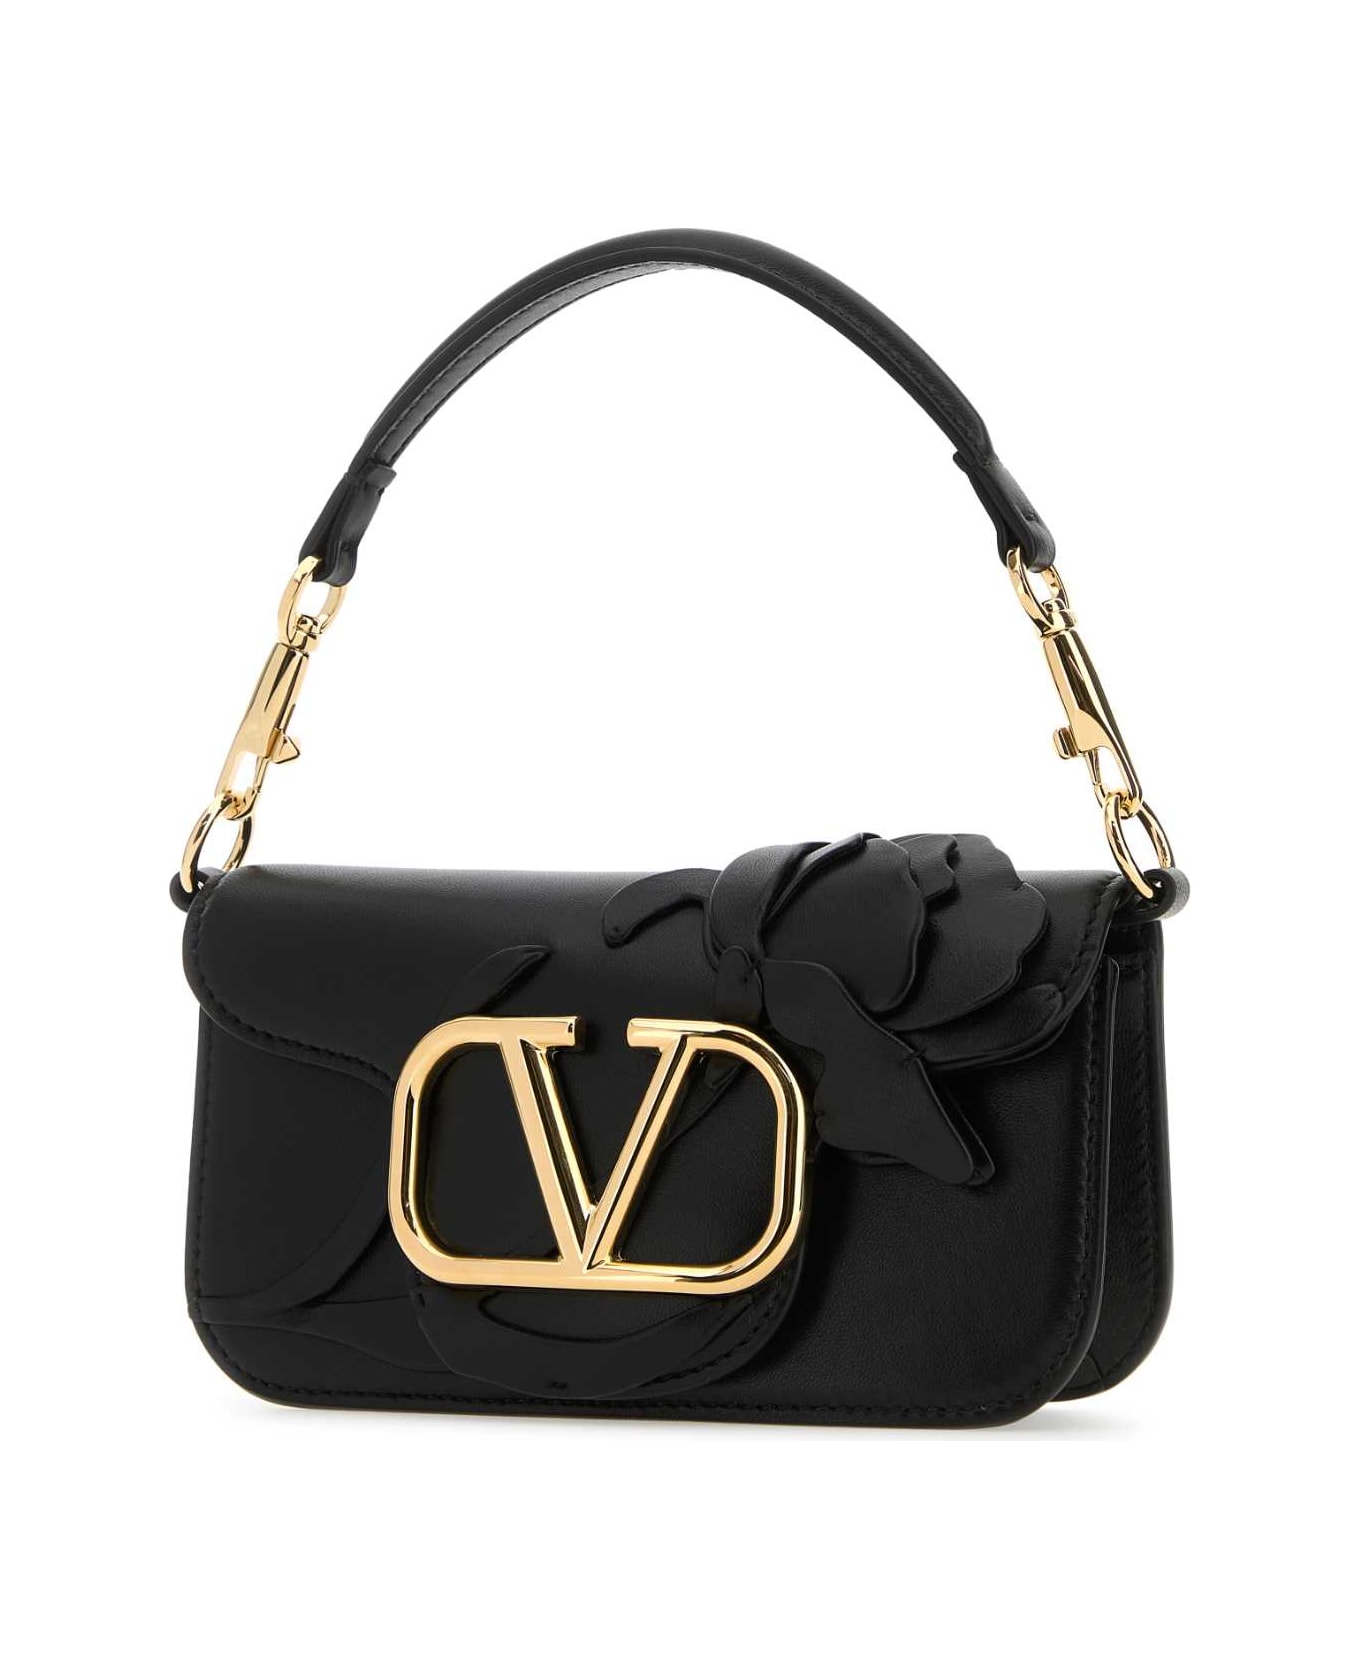 Valentino Garavani Black Leather Locã² Small Handbag - NERO トートバッグ